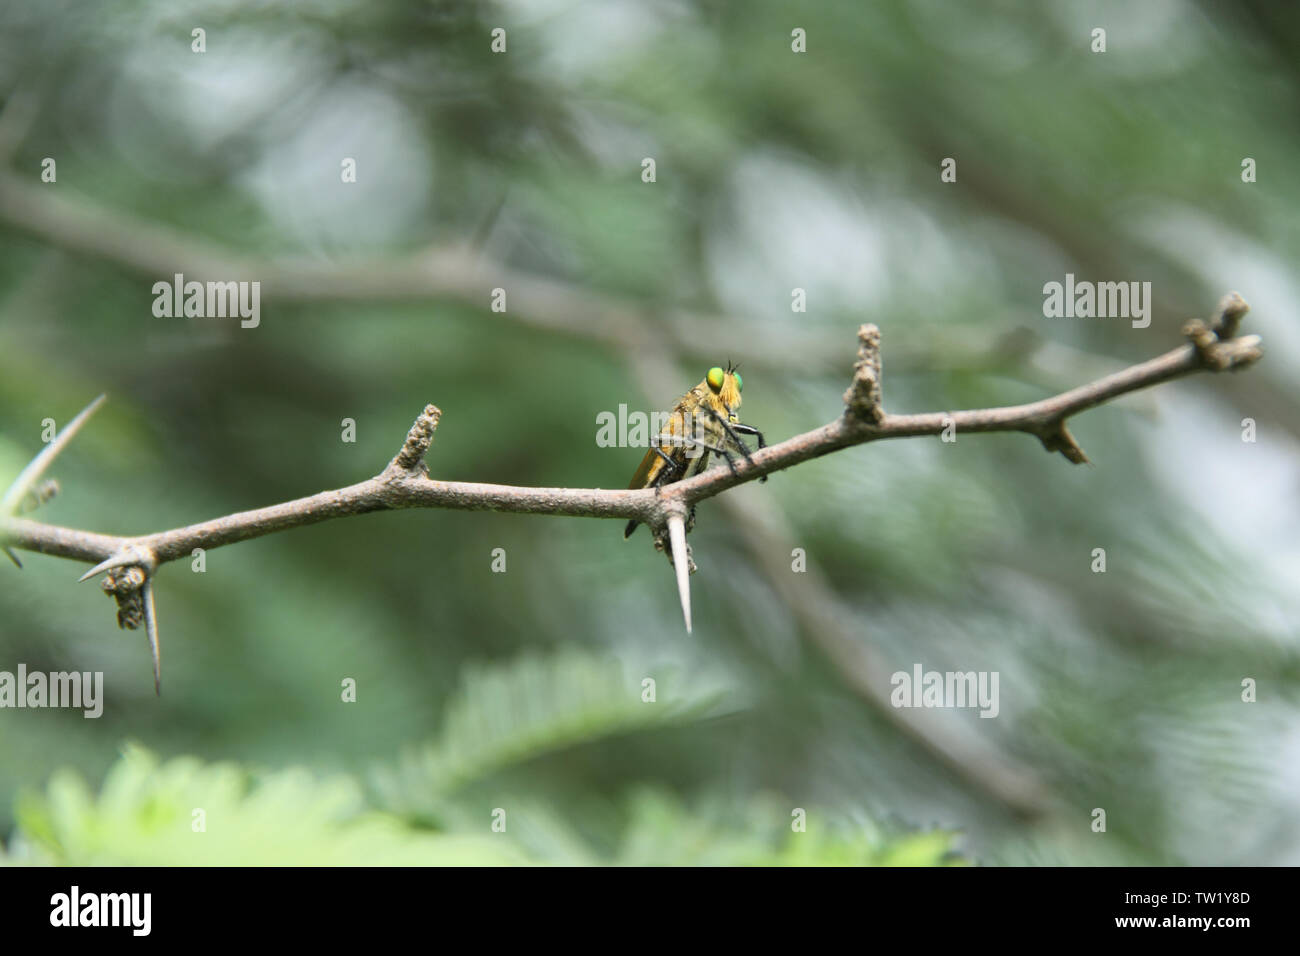 Grasshopper on a twig Stock Photo